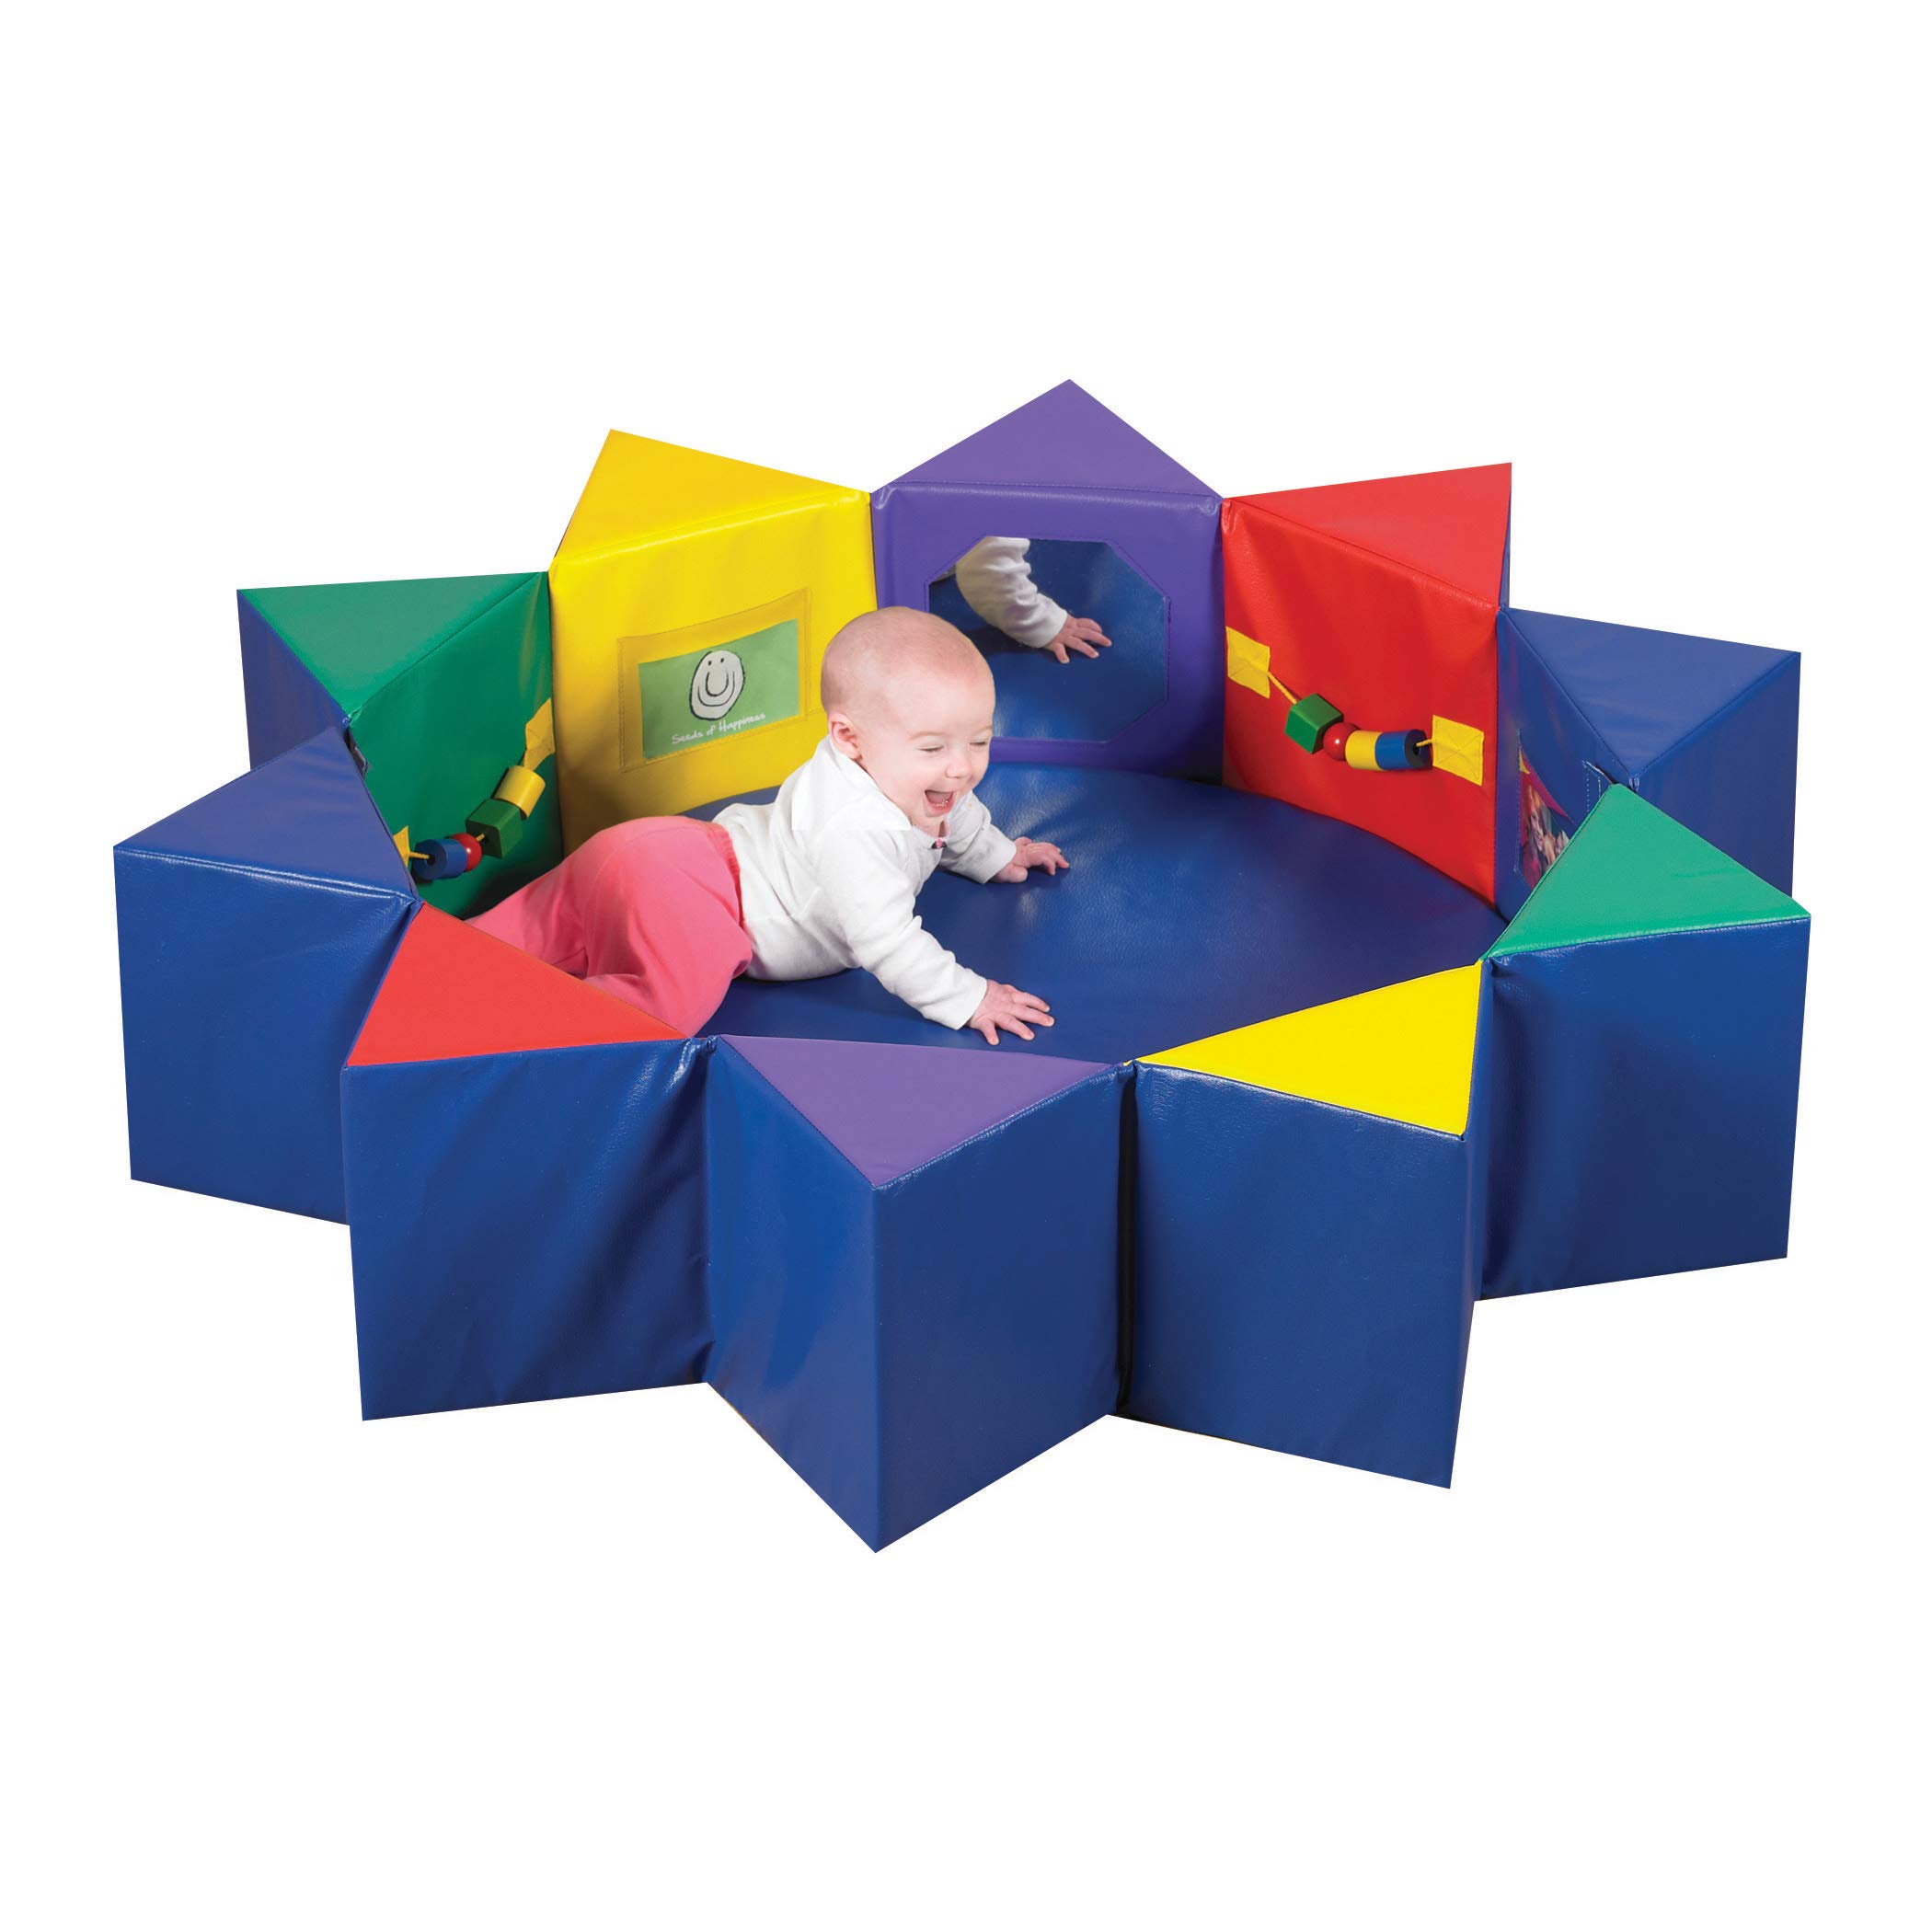 Children's Factory Multi-Activity Pentagon Set, CF332-392, Baby & Toddler Foam Floor Play Yard, Infant Sensory Mat for Playroom, Daycare or Preschool